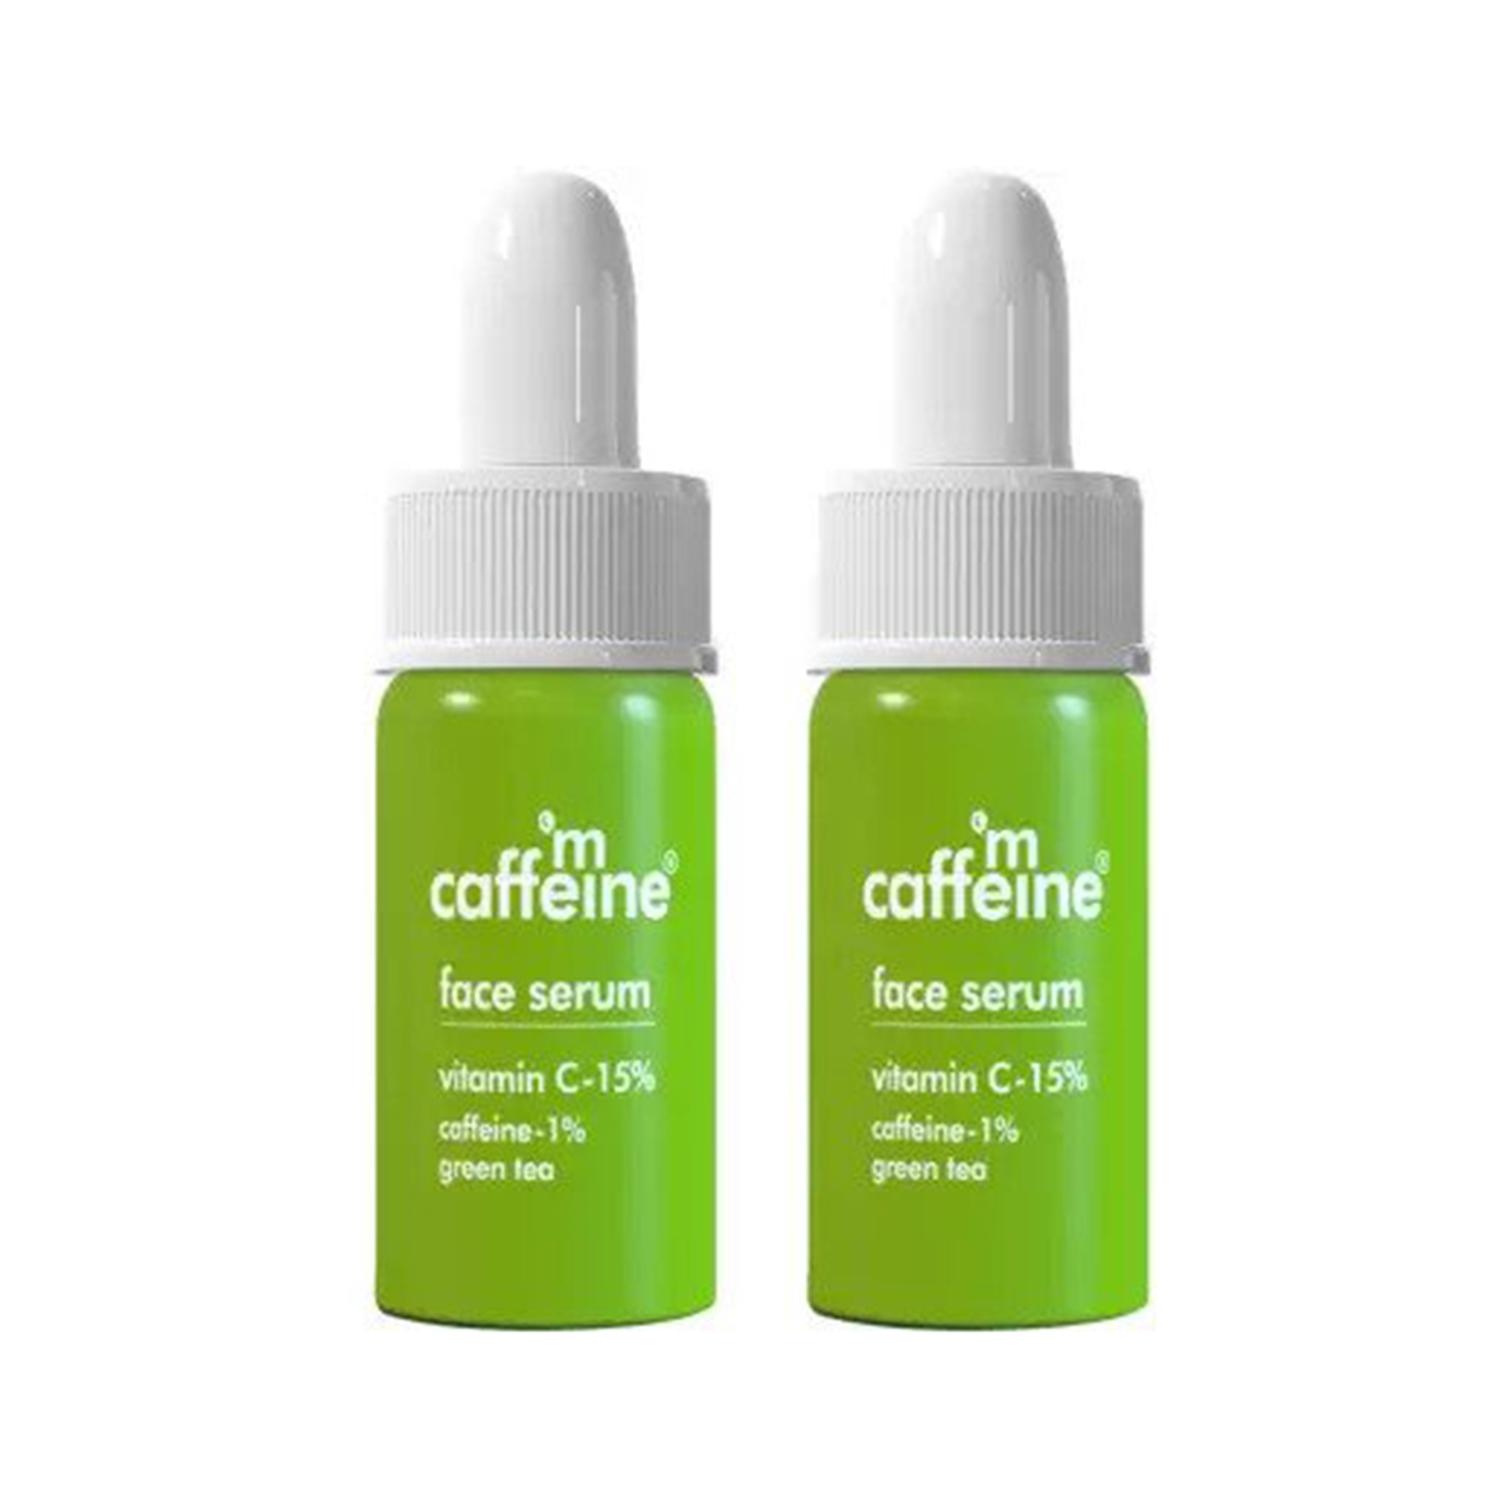 mCaffeine | mCaffeine Green Tea 15% Vitamin C Face Serum for Glowing Skin Combo